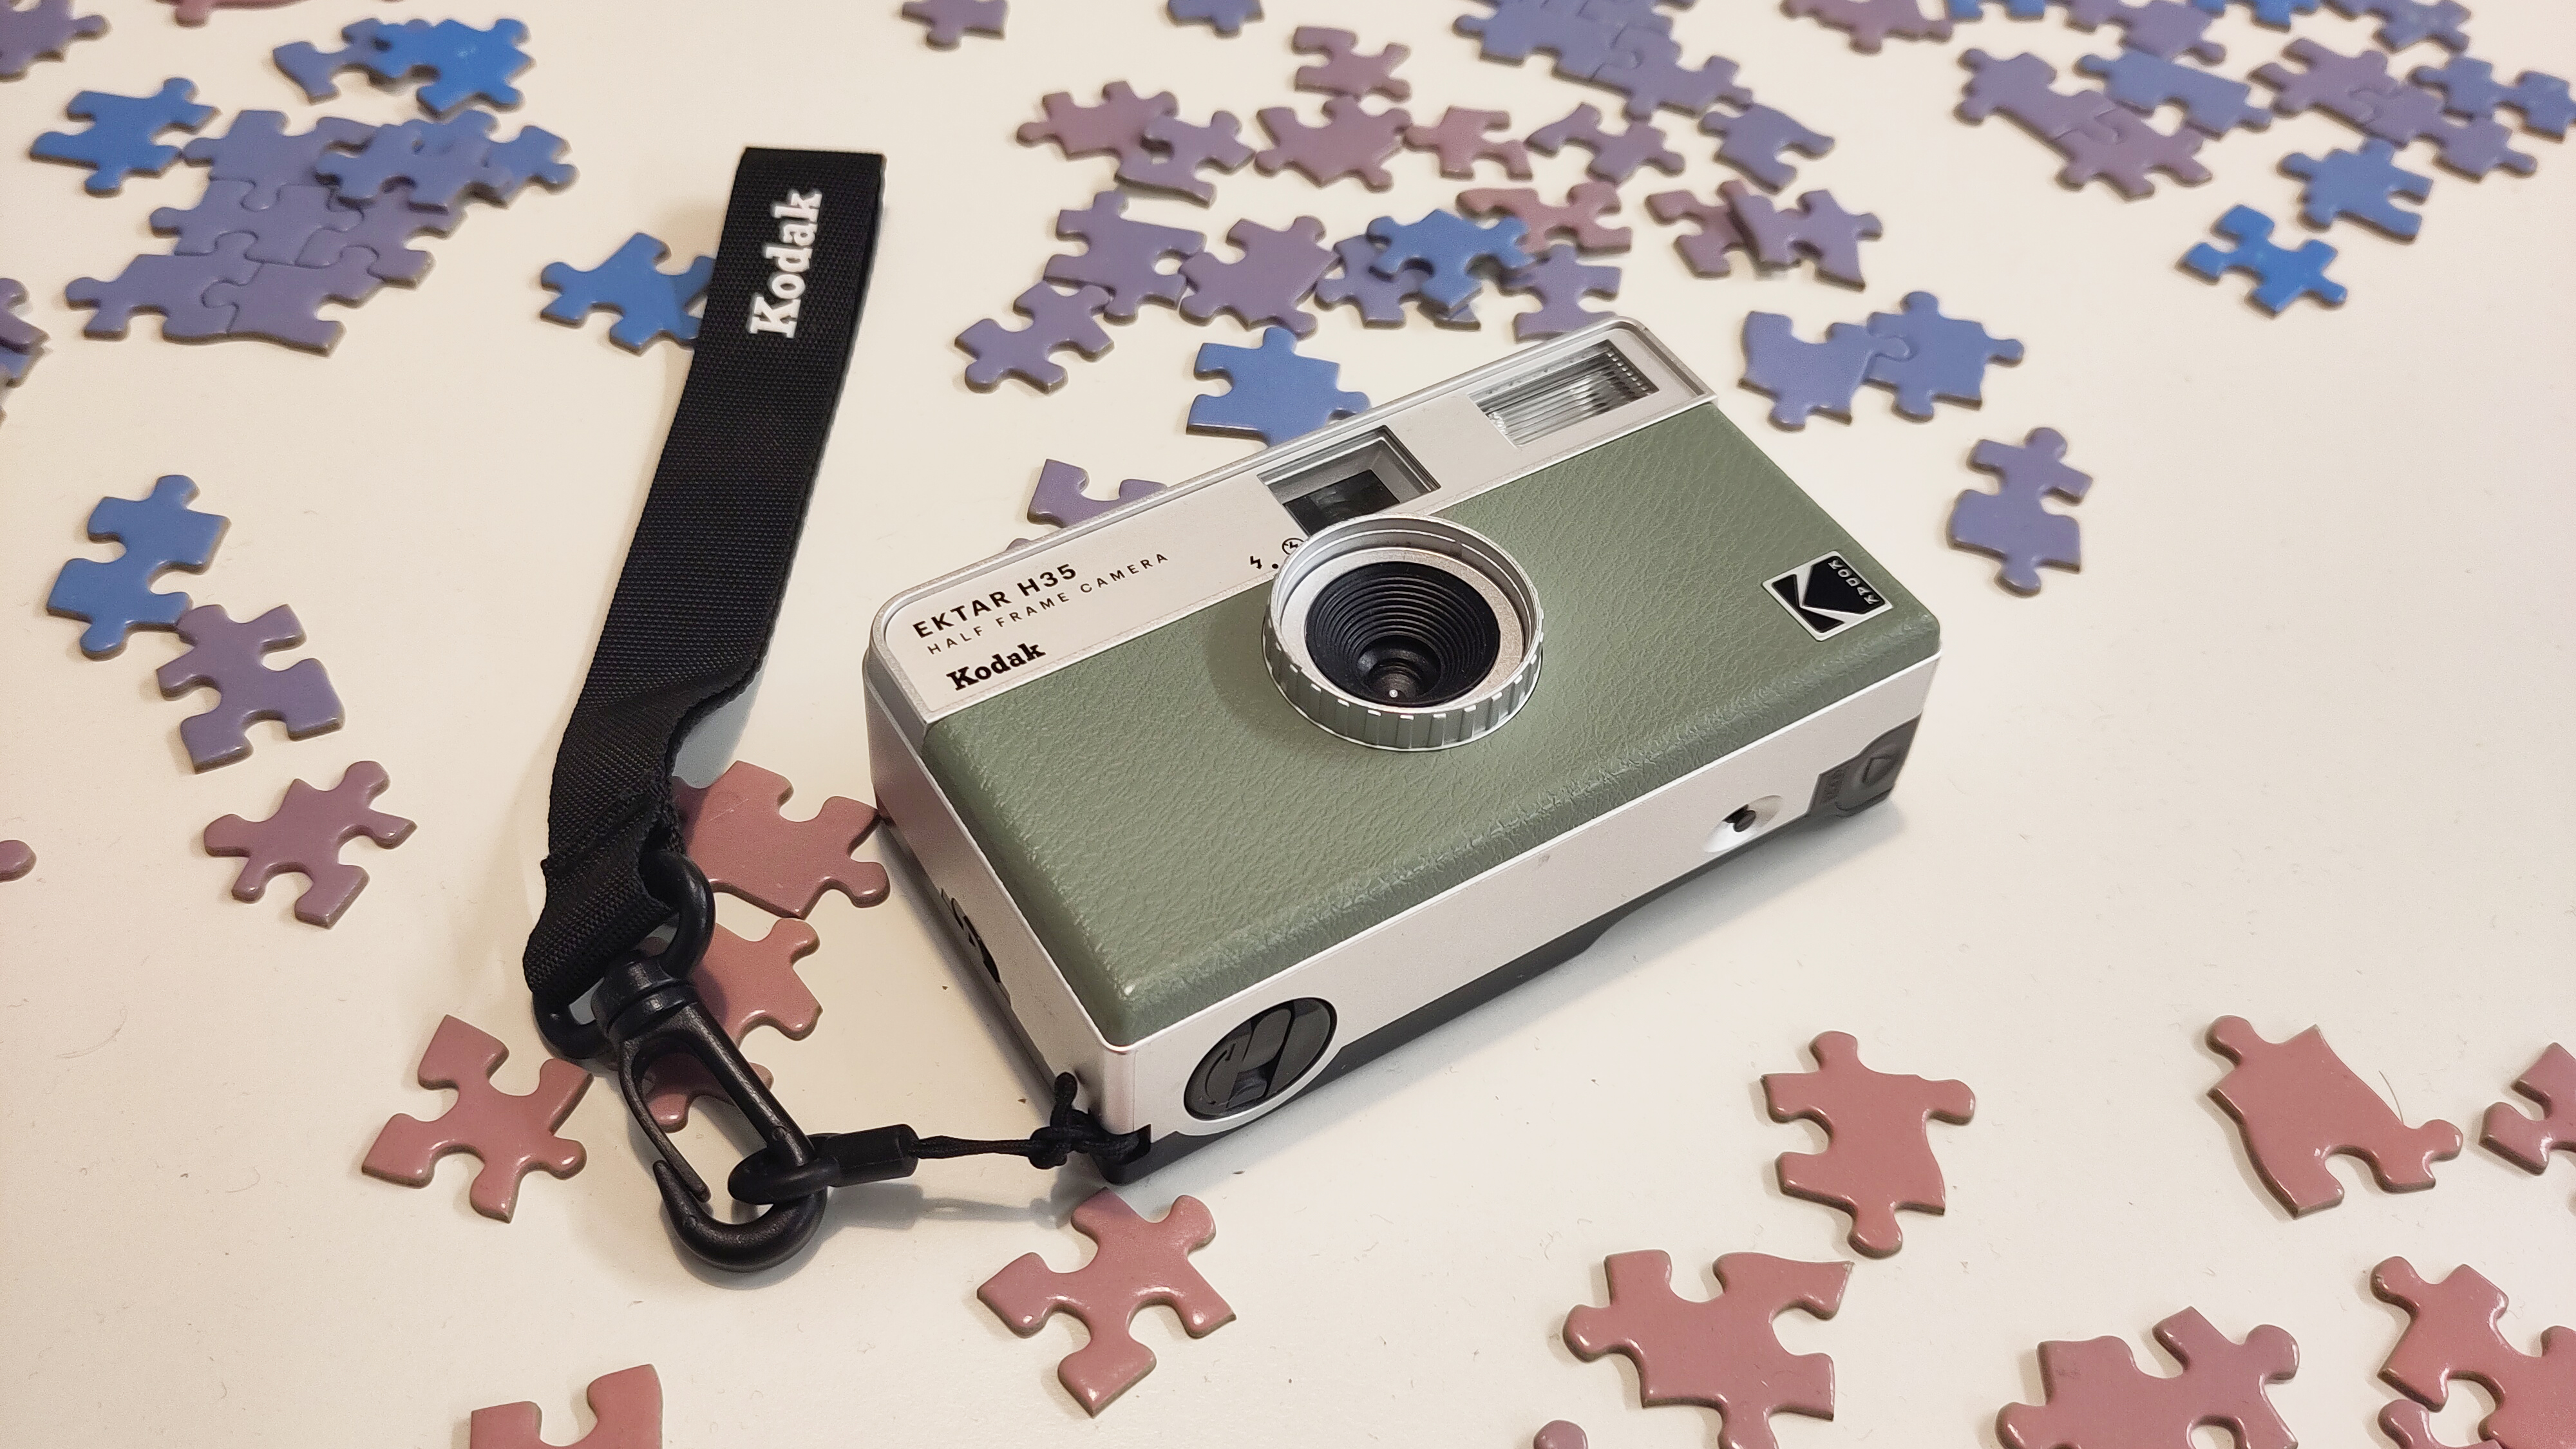 Kodak Ektar H35N Half Frame film camera released - Amateur Photographer